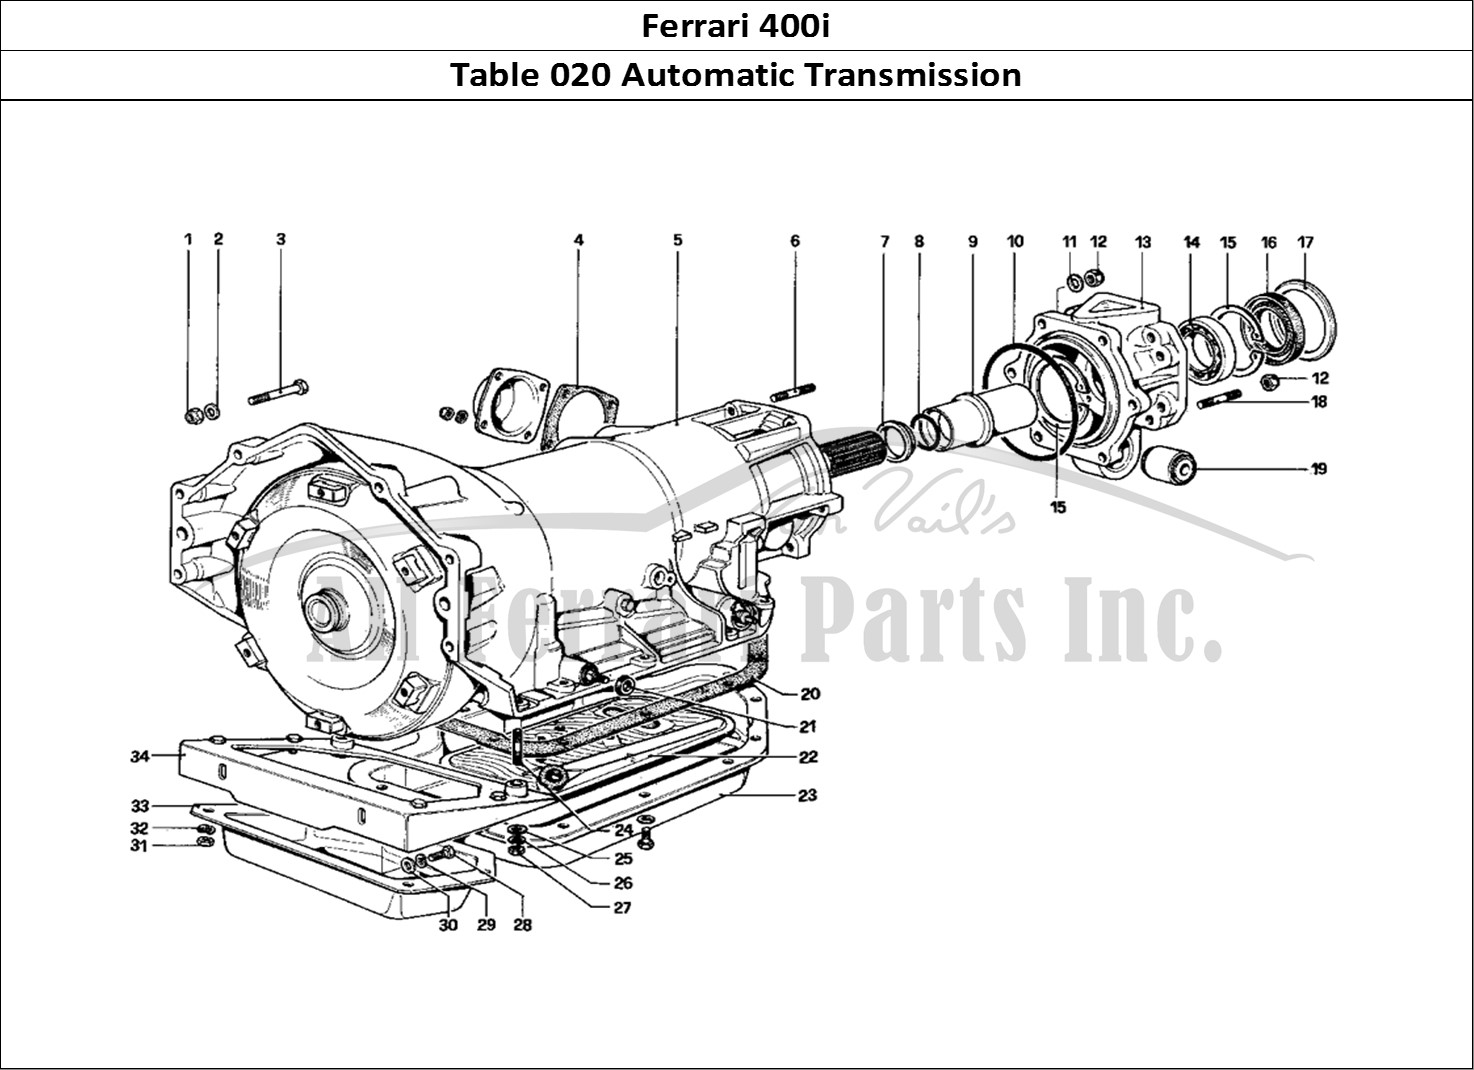 Ferrari Parts Ferrari 400i (1983 Mechanical) Page 020 Automatic Transmission (4